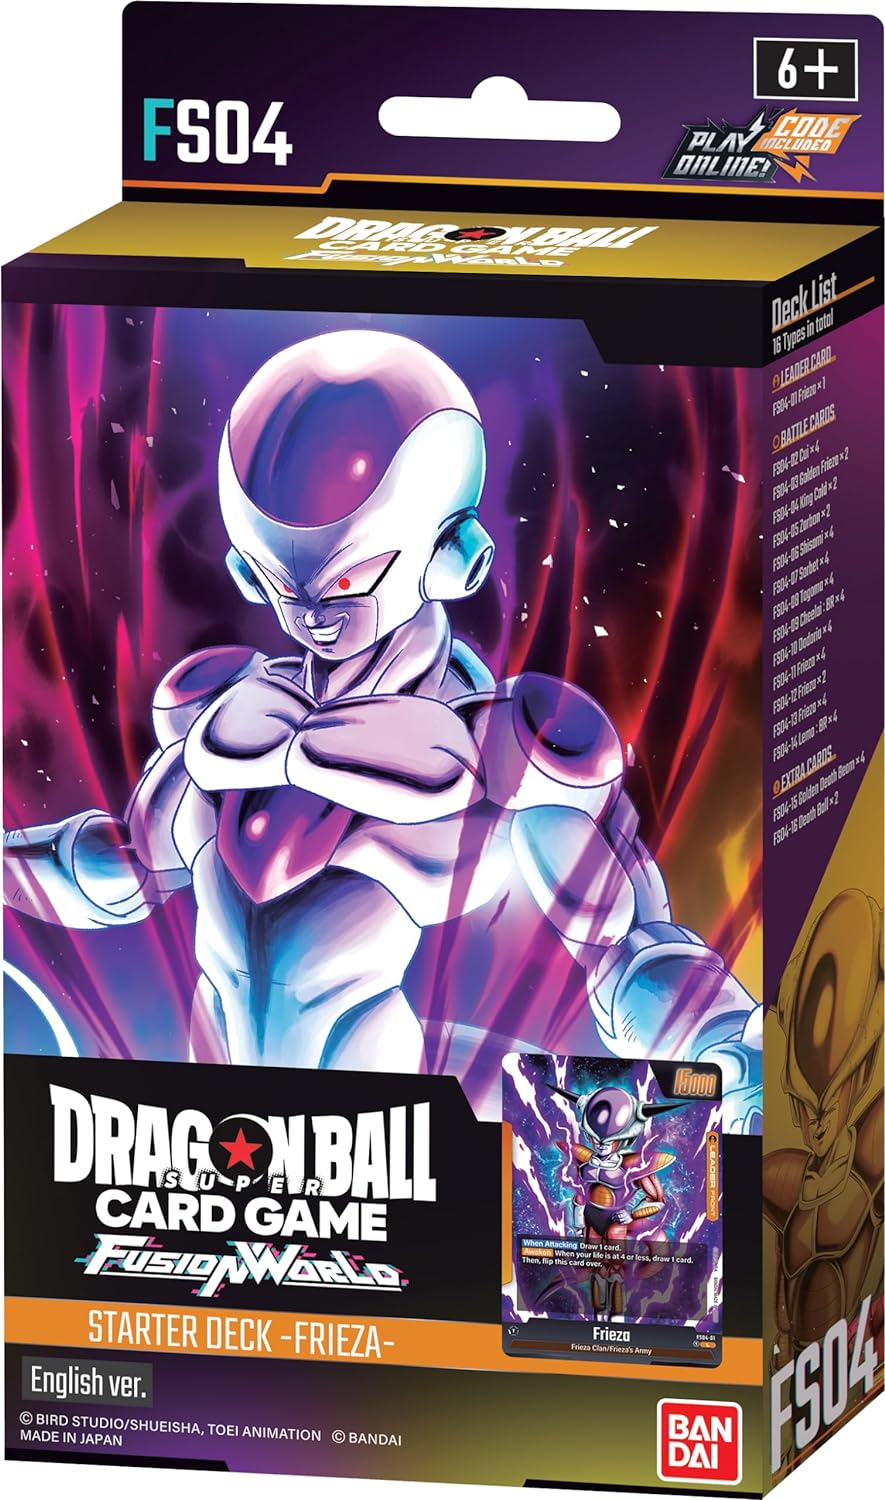 Dragon Ball Super Card Game: Starter Deck - Frieza - Fusion World (FS04) - Englisch